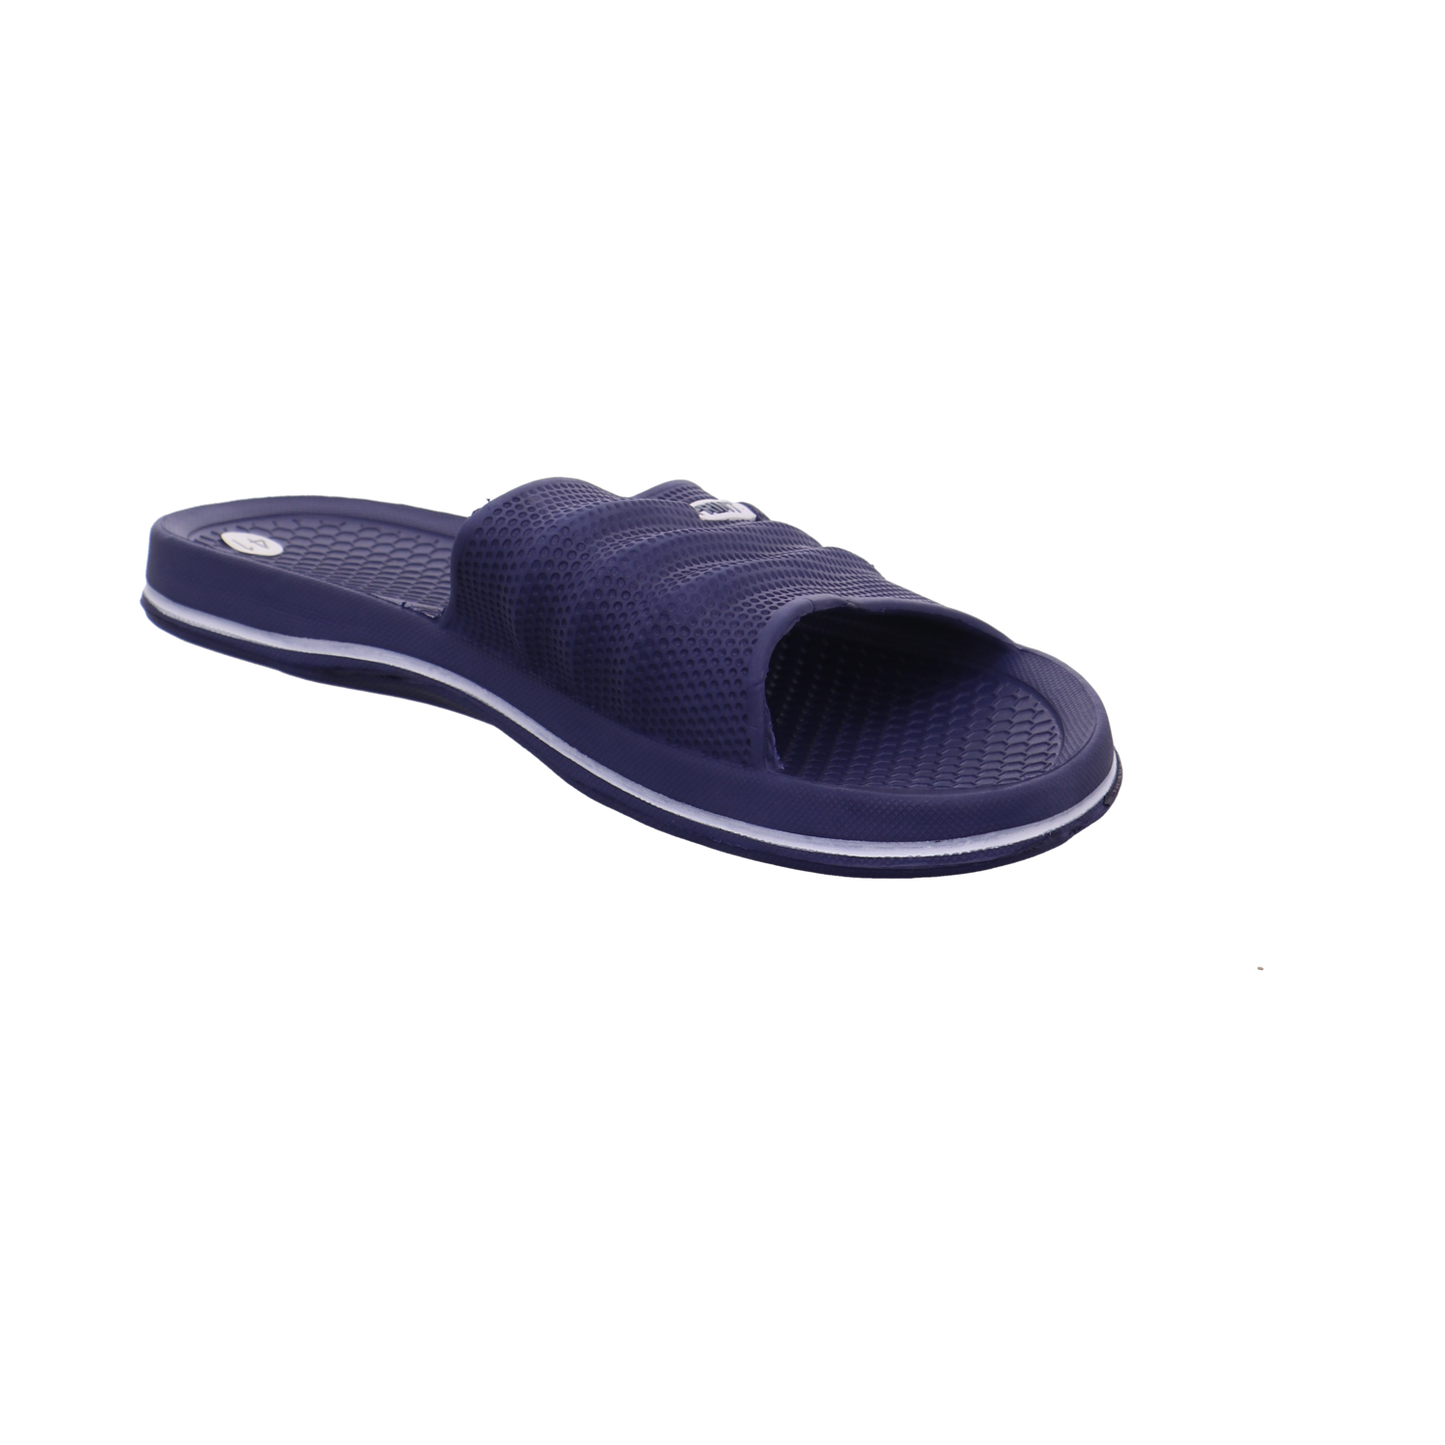 Sprint Schuhe  dunkel-blau Bild7